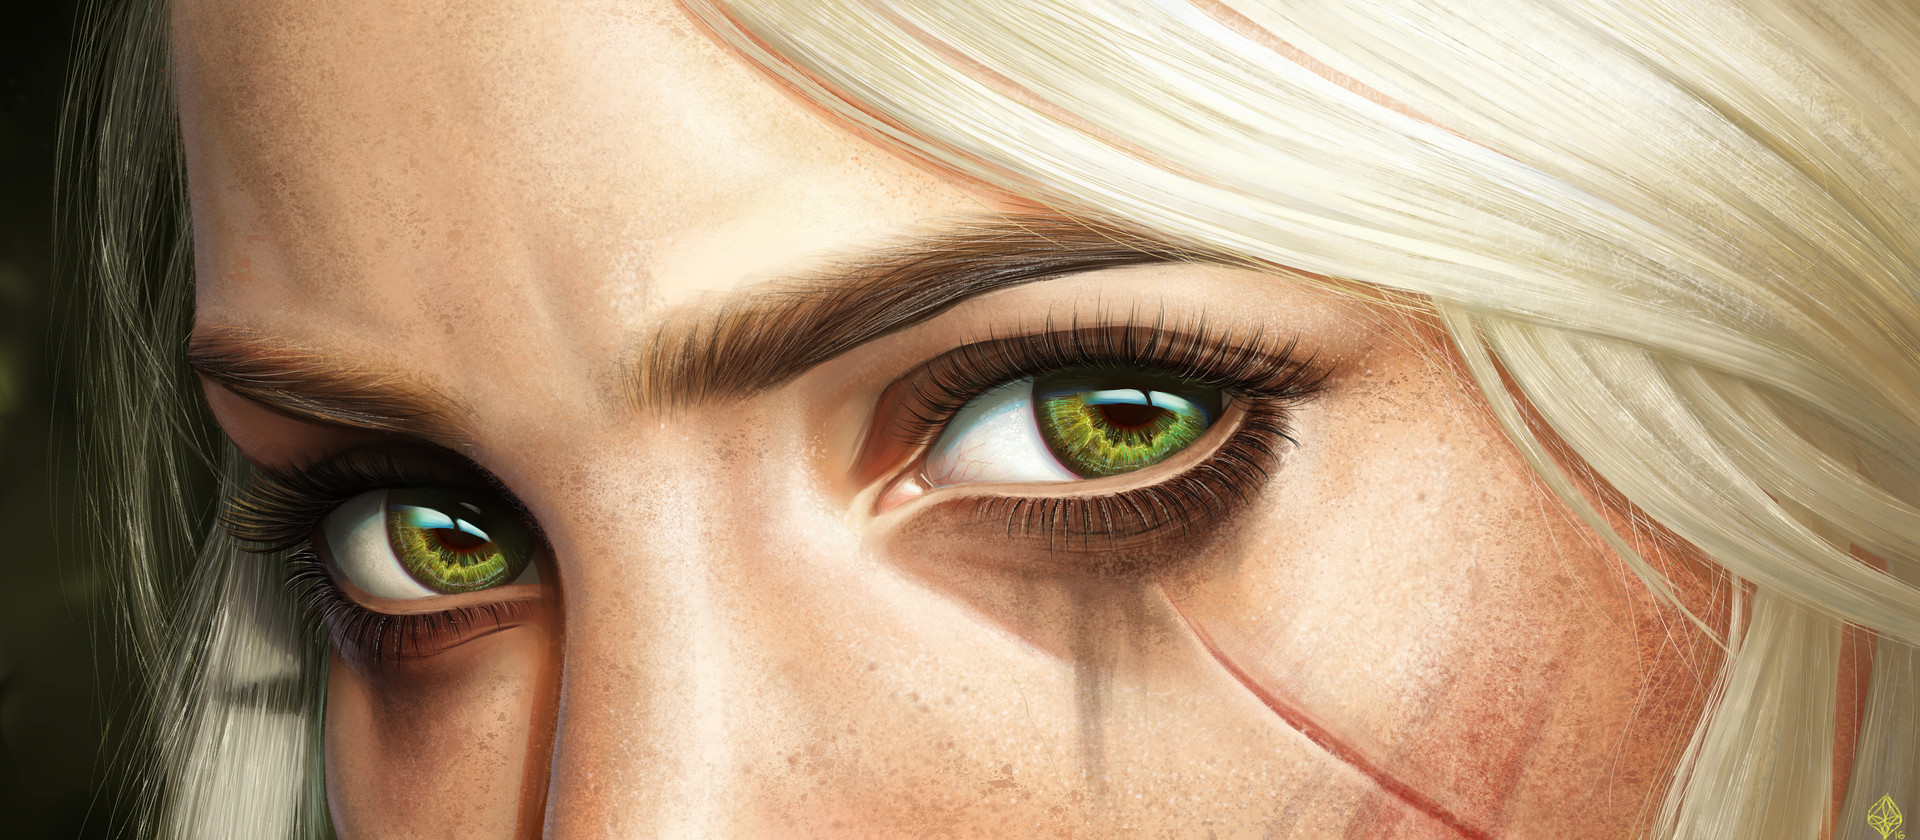 General 1920x840 digital art eyes closeup Cirilla Fiona Elen Riannon The Witcher 3: Wild Hunt